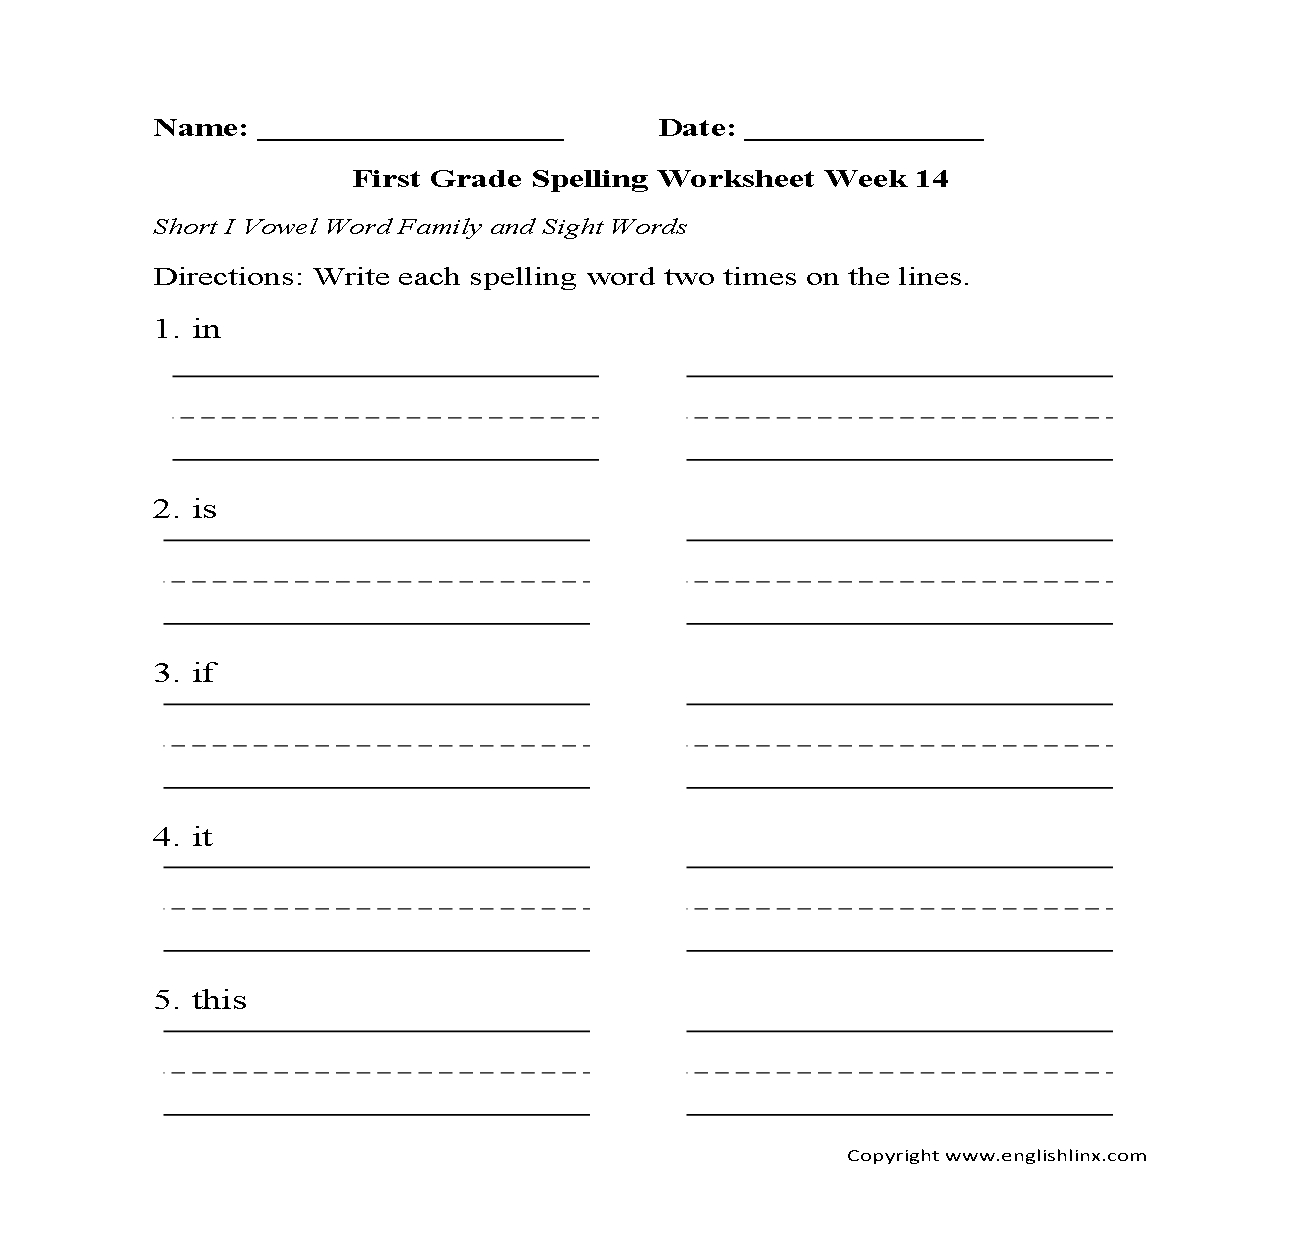 Spelling Worksheets  First Grade Spelling Worksheets In Free First Grade Spelling Worksheets